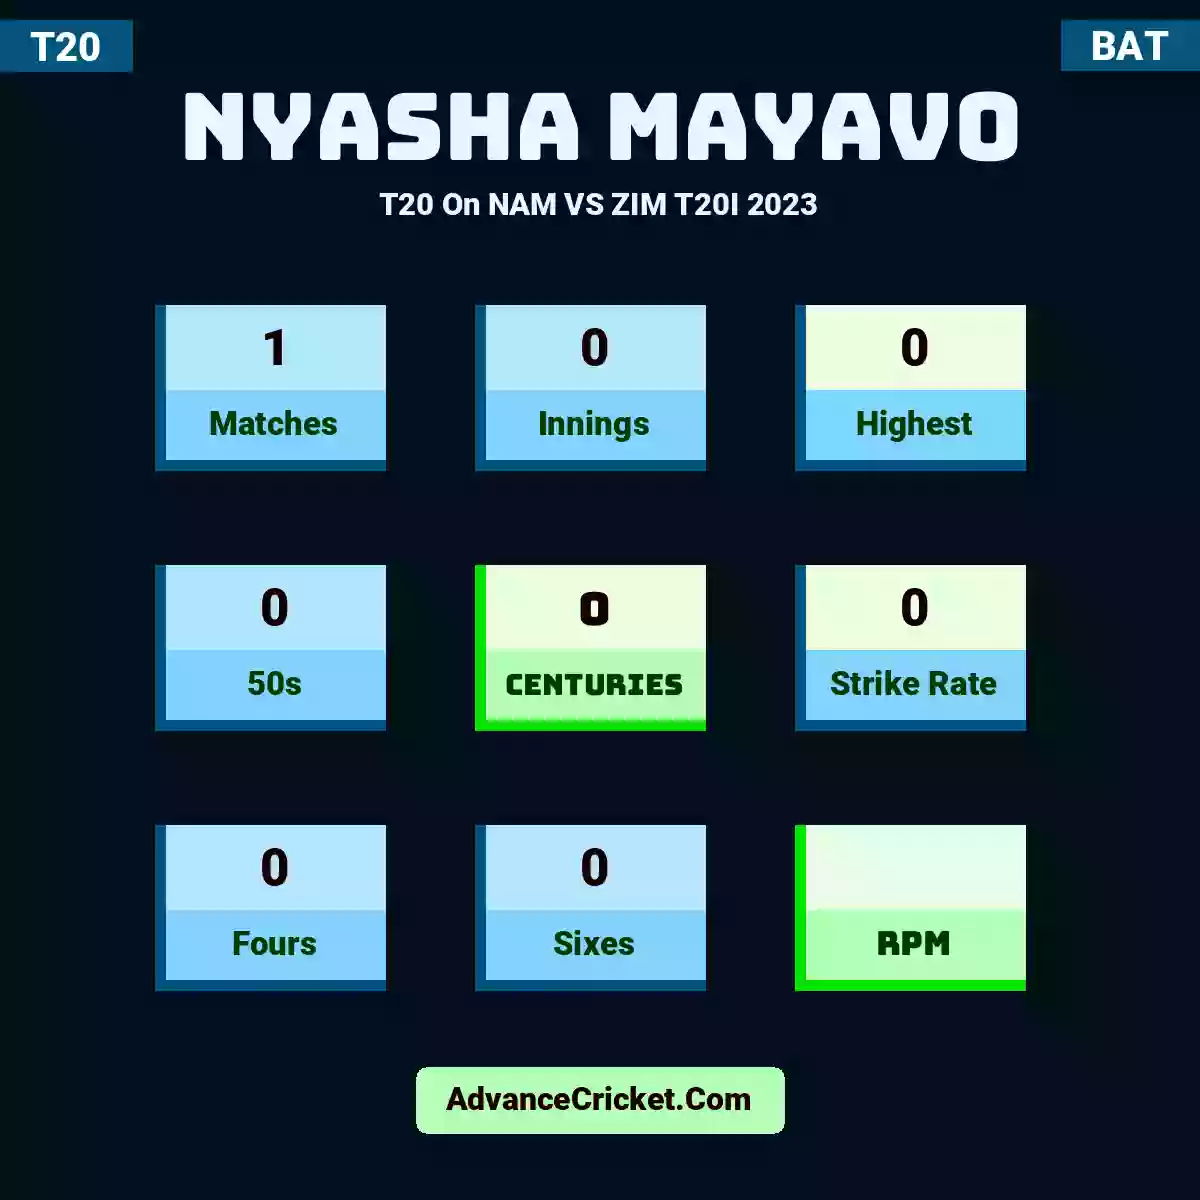 Nyasha Mayavo T20  On NAM VS ZIM T20I 2023, Nyasha Mayavo played 1 matches, scored 0 runs as highest, 0 half-centuries, and 0 centuries, with a strike rate of 0. N.Mayavo hit 0 fours and 0 sixes.